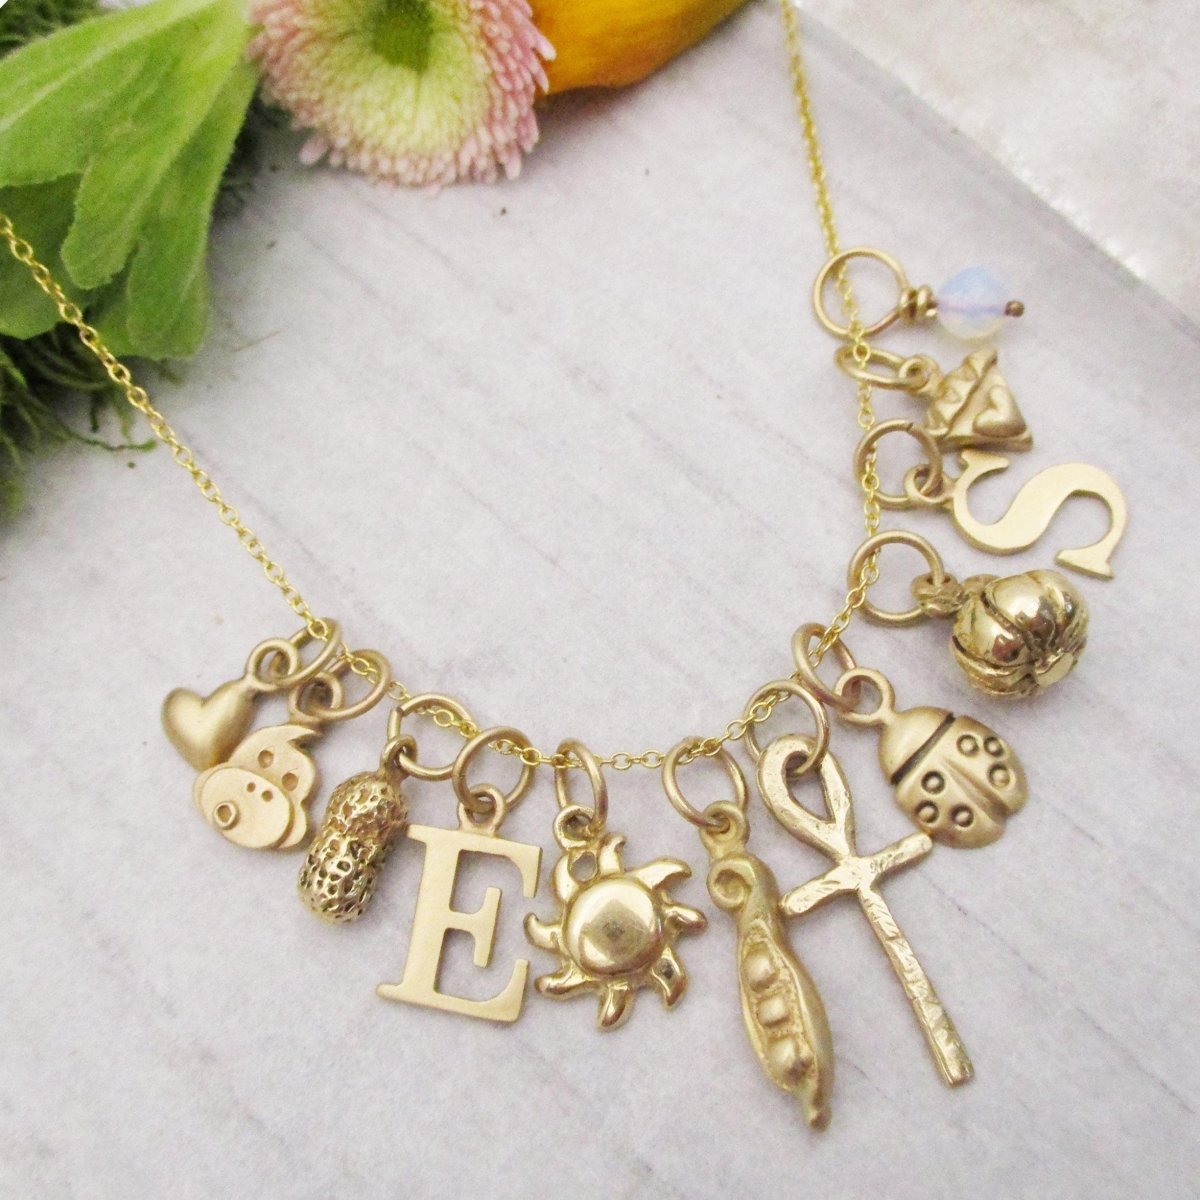 14 Karat Gold Sweet Pea Charm, Peas in a Pod Charm, My Sweet Pea Pendant - Luxe Design Jewellery